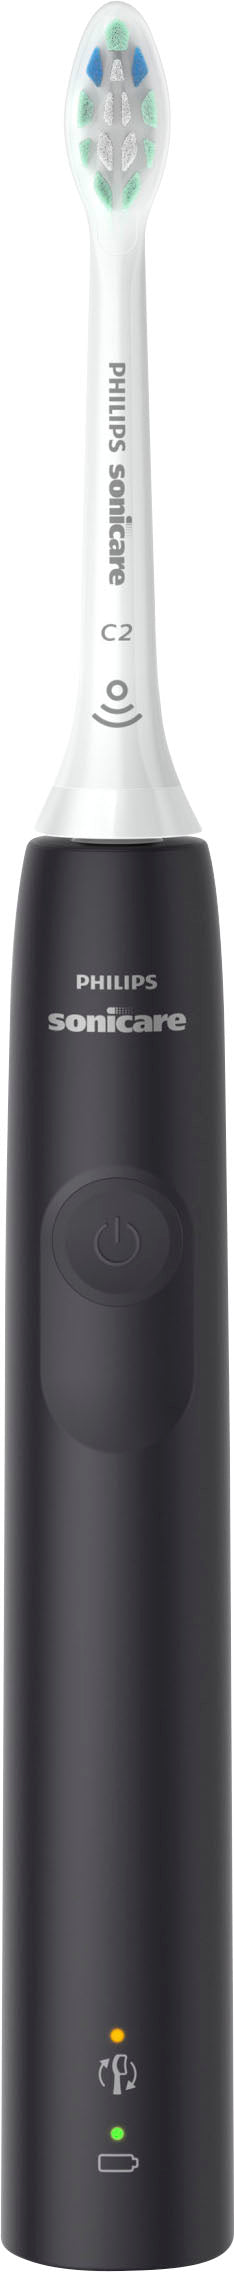 Philips Sonicare 4100 Power Toothbrush - Black_4